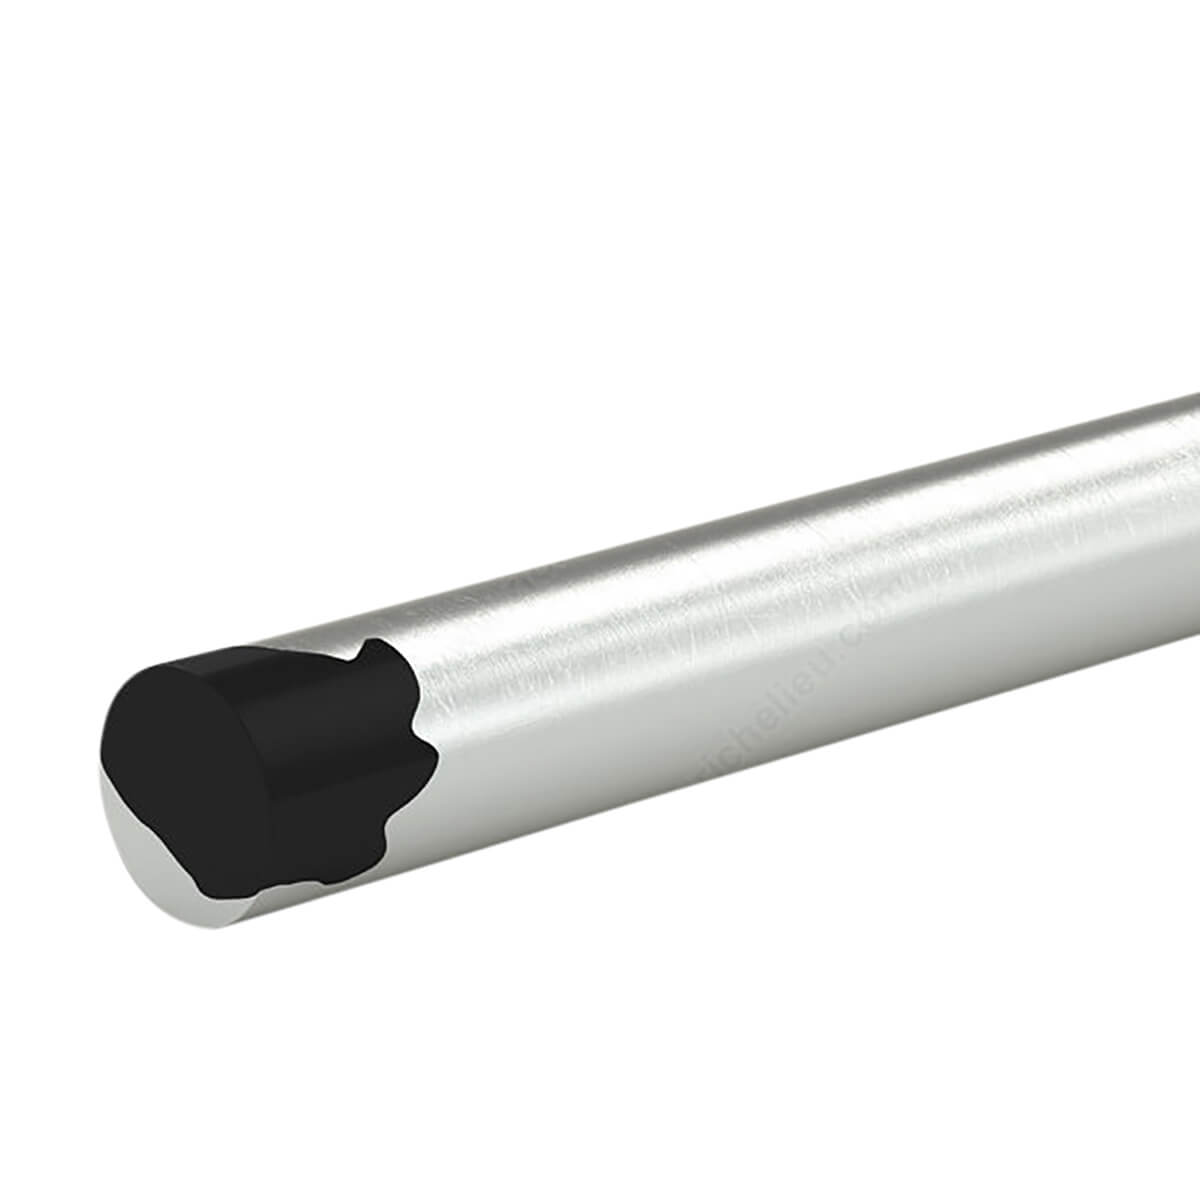 Unthreaded Rod - Black Tip - Galvanized Steel - 1/8-in X 36-in